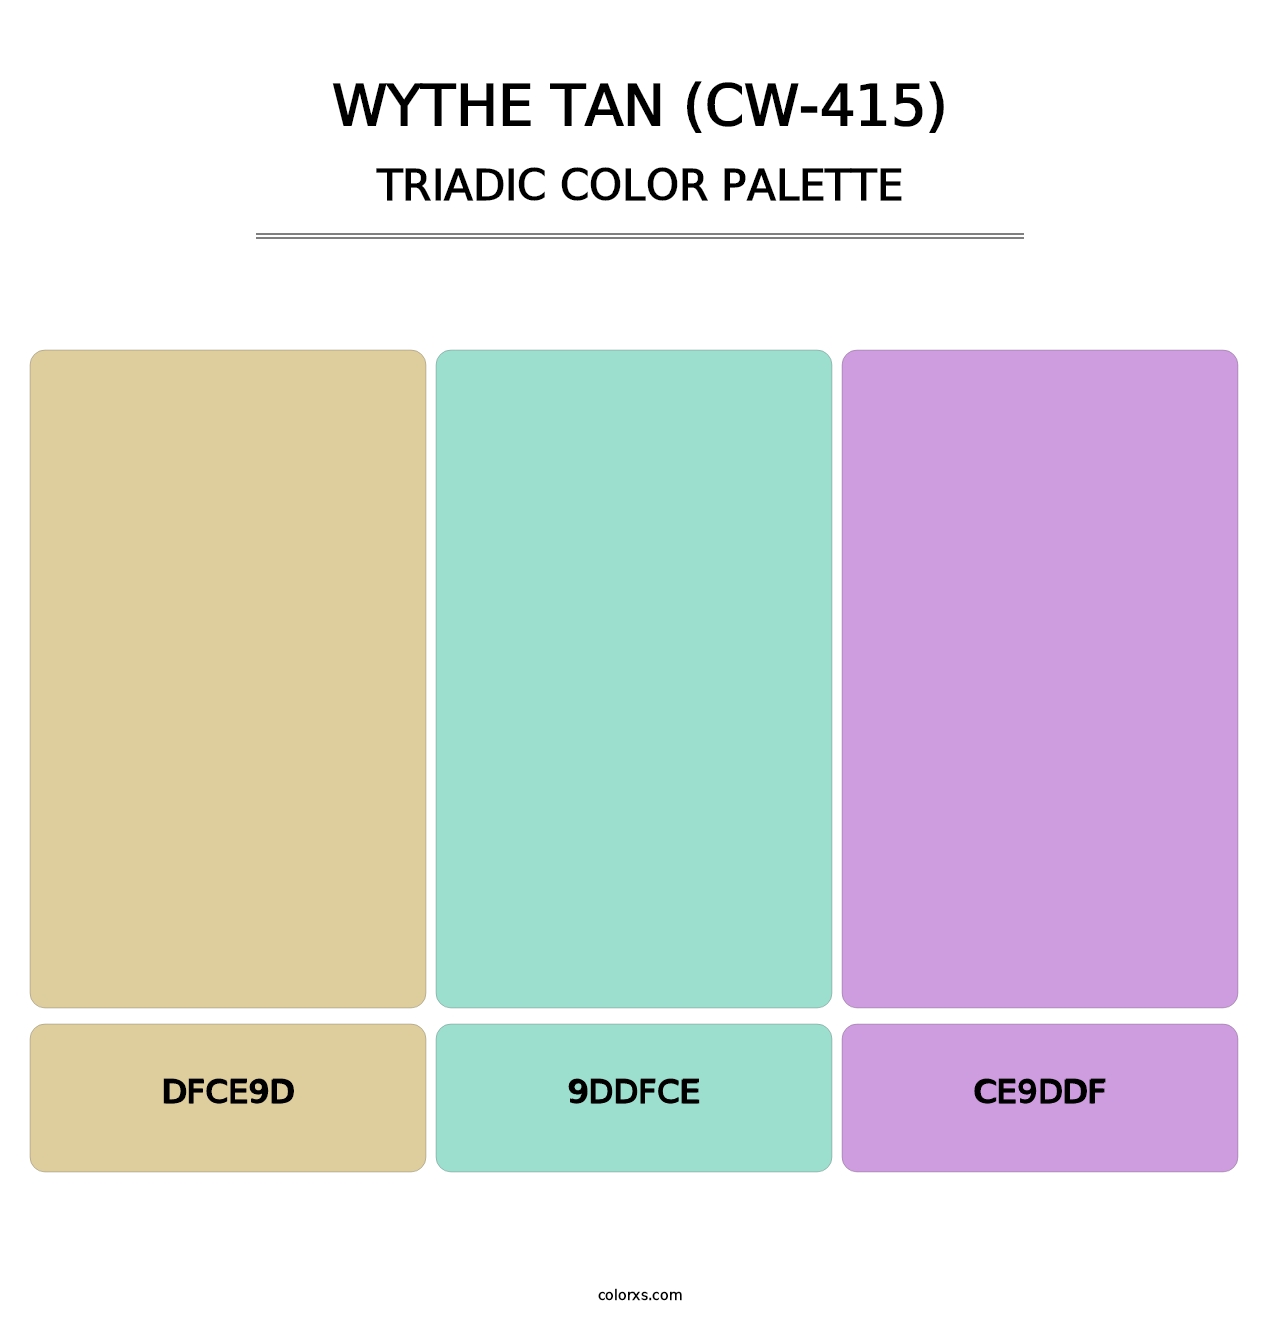 Wythe Tan (CW-415) - Triadic Color Palette